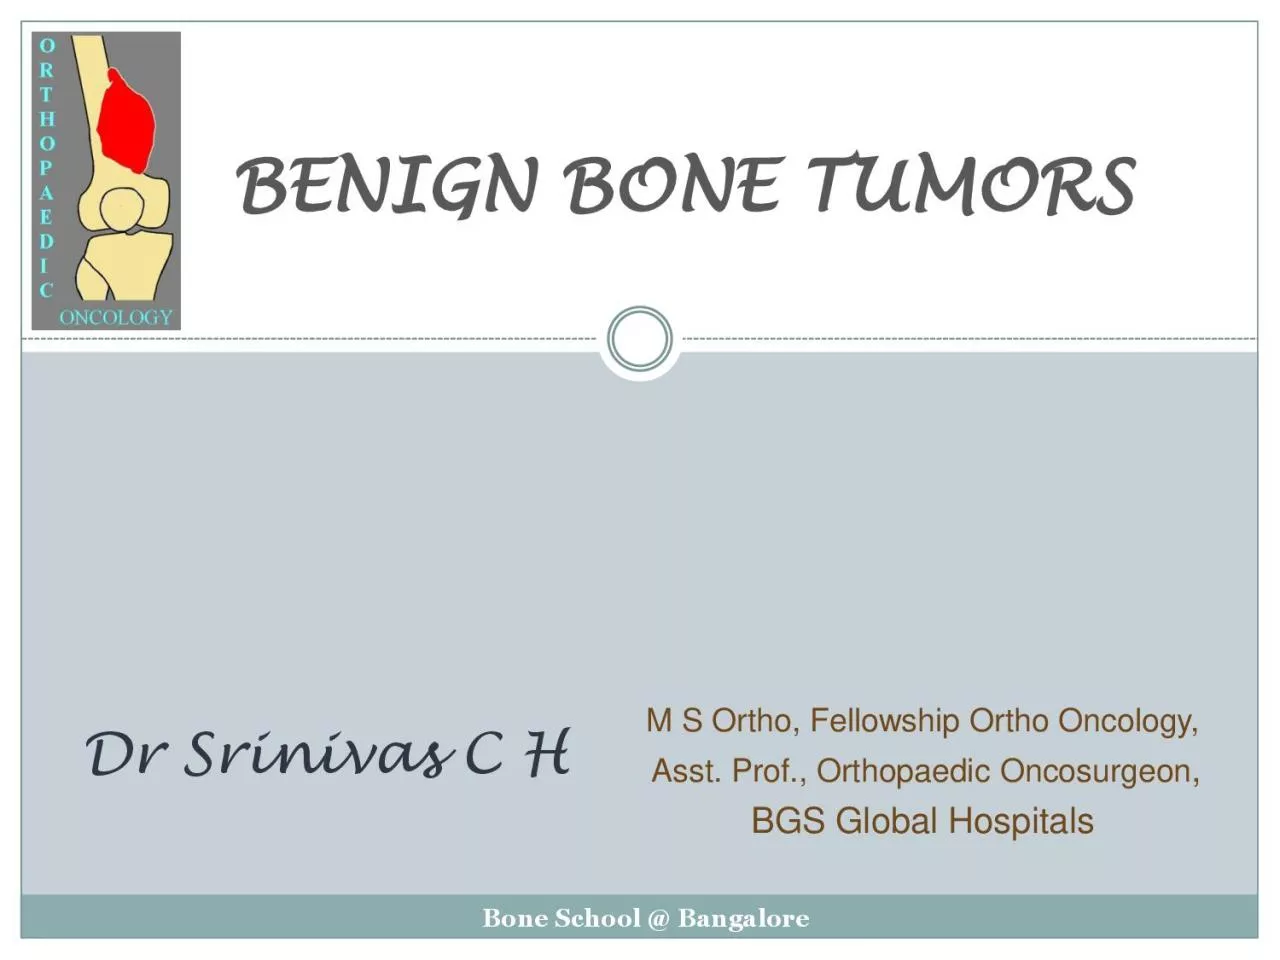 M S Ortho Fellowship Ortho Oncology